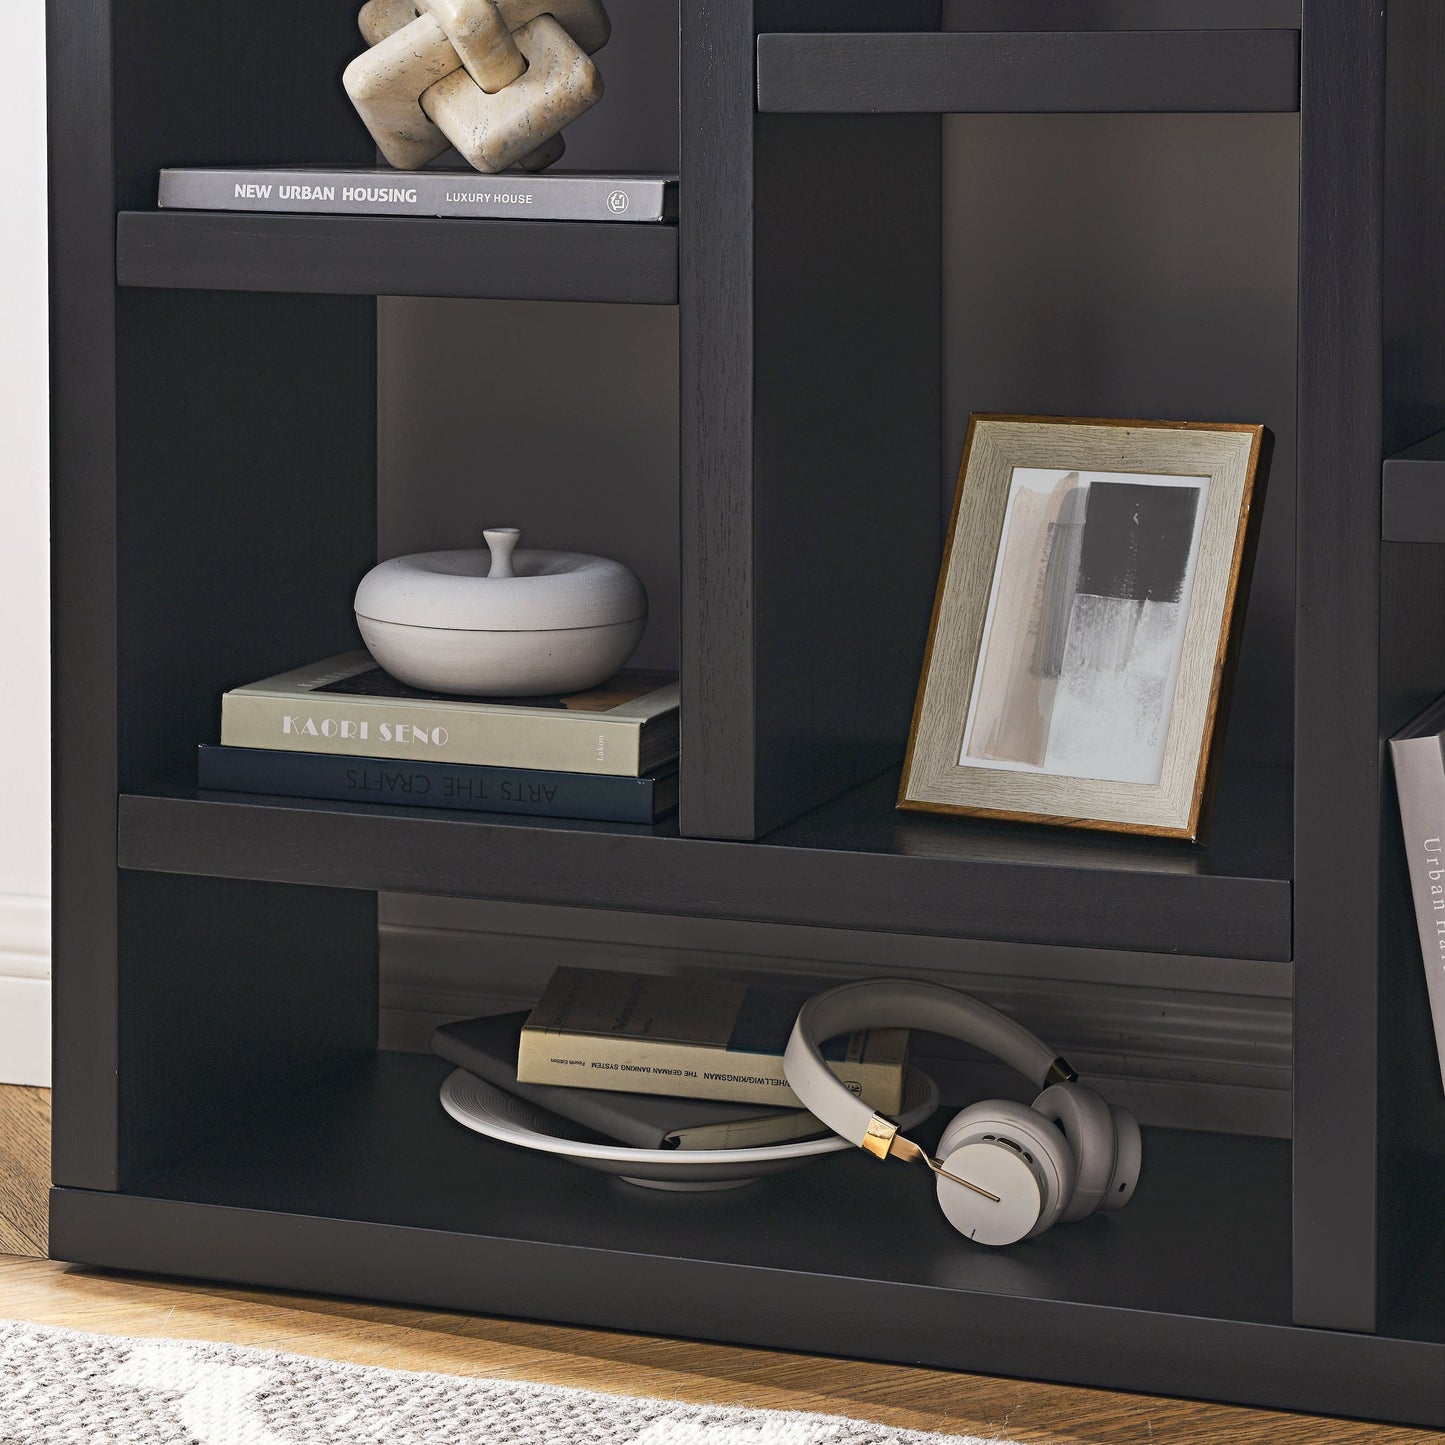 Open Wooden Open Shelf Bookcase, Freestanding Display Storage Cabinet with 7 Cube Storage Spaces, Floor Standing Bookshelf, Entryway, Living Room Storage Cabinet